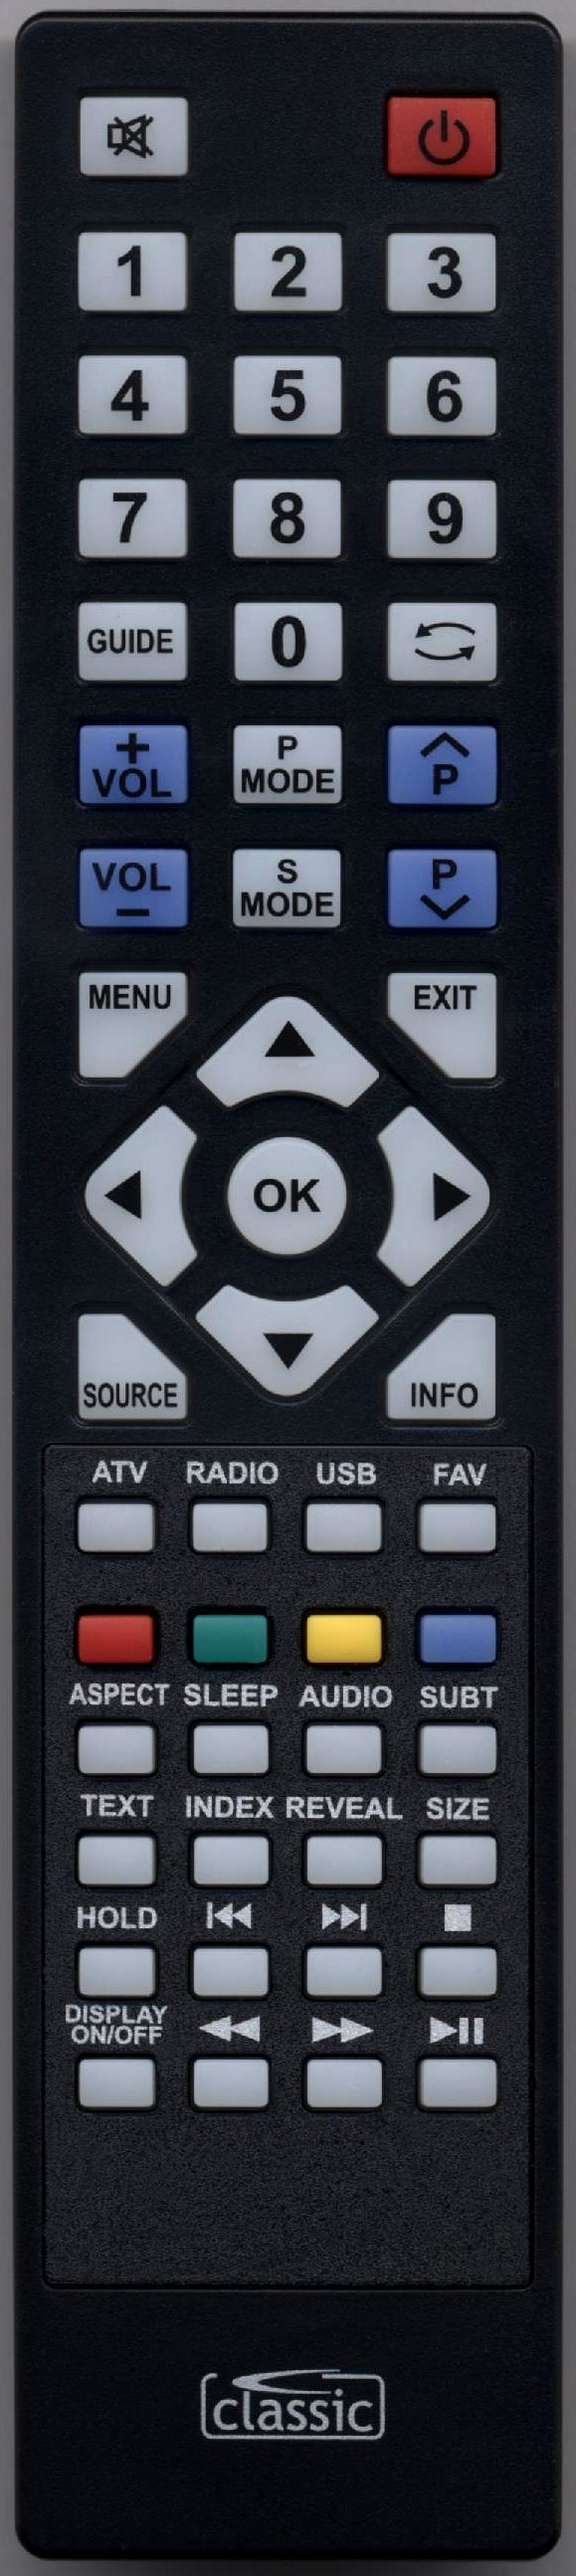 Emotion XMURMC0032 Remote Control Alternative